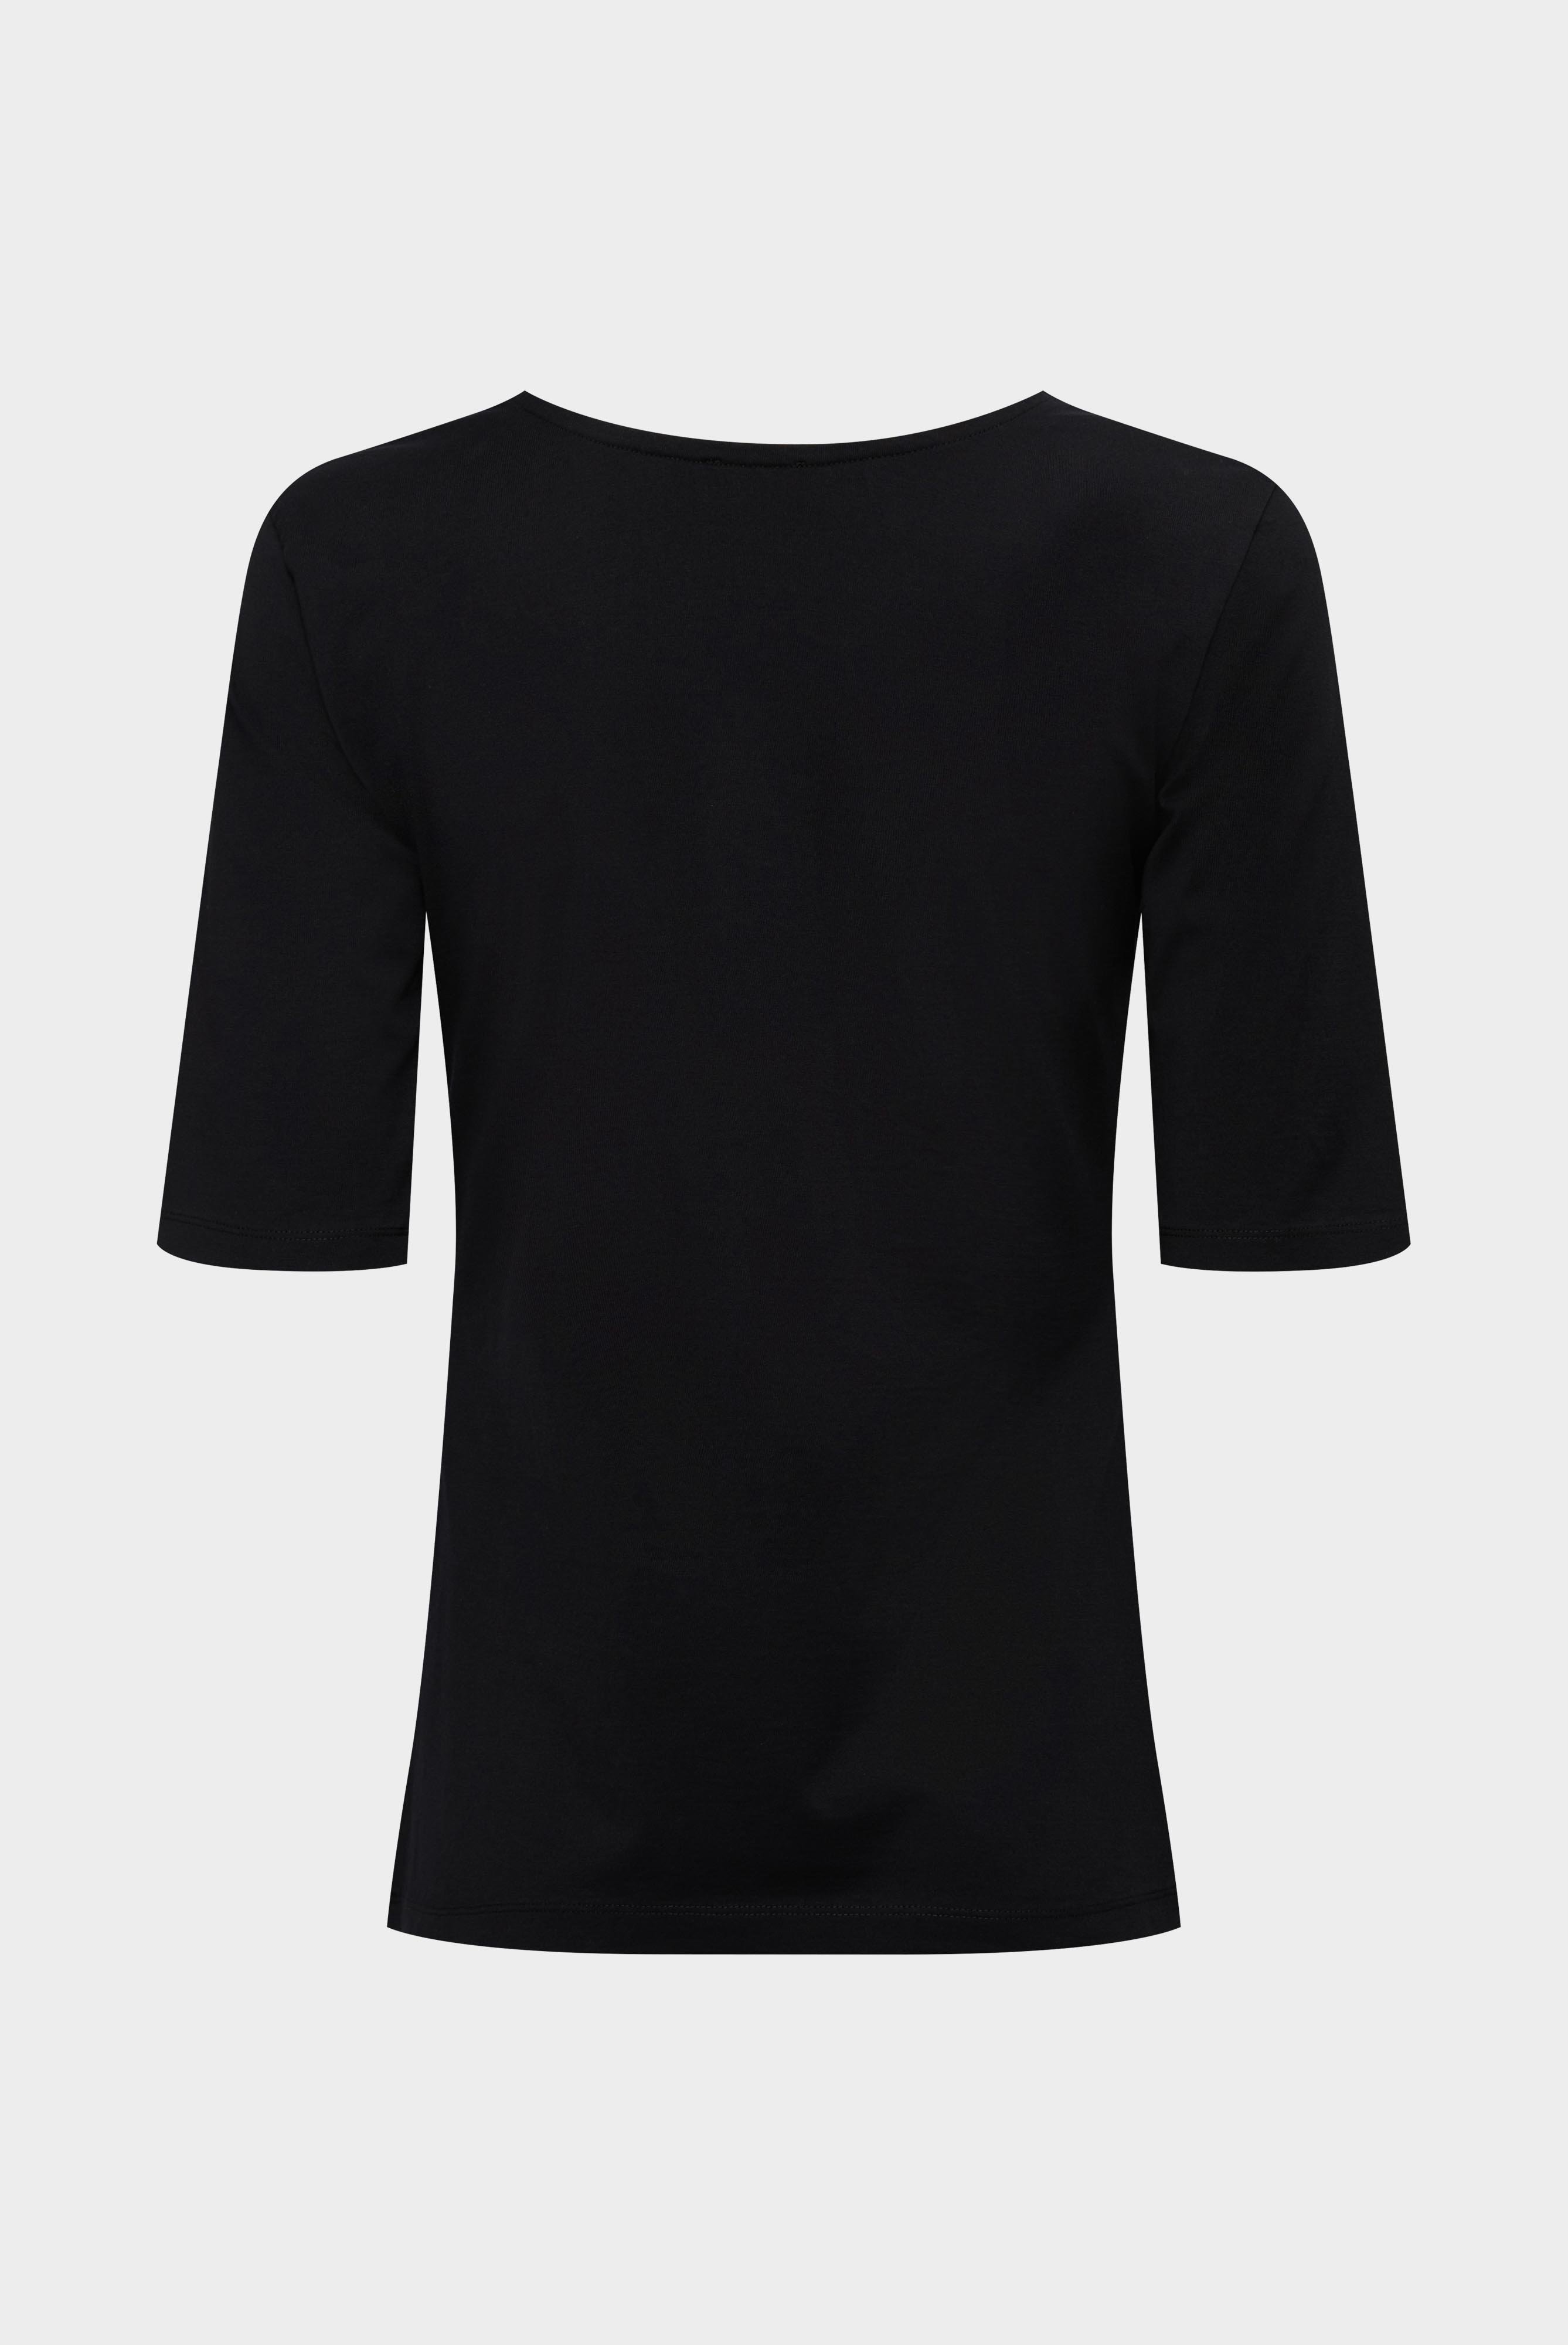 Tops & T-Shirts+Urban Jersey Wide Neck T-Shirt+05.2911..Z20044.099.XS